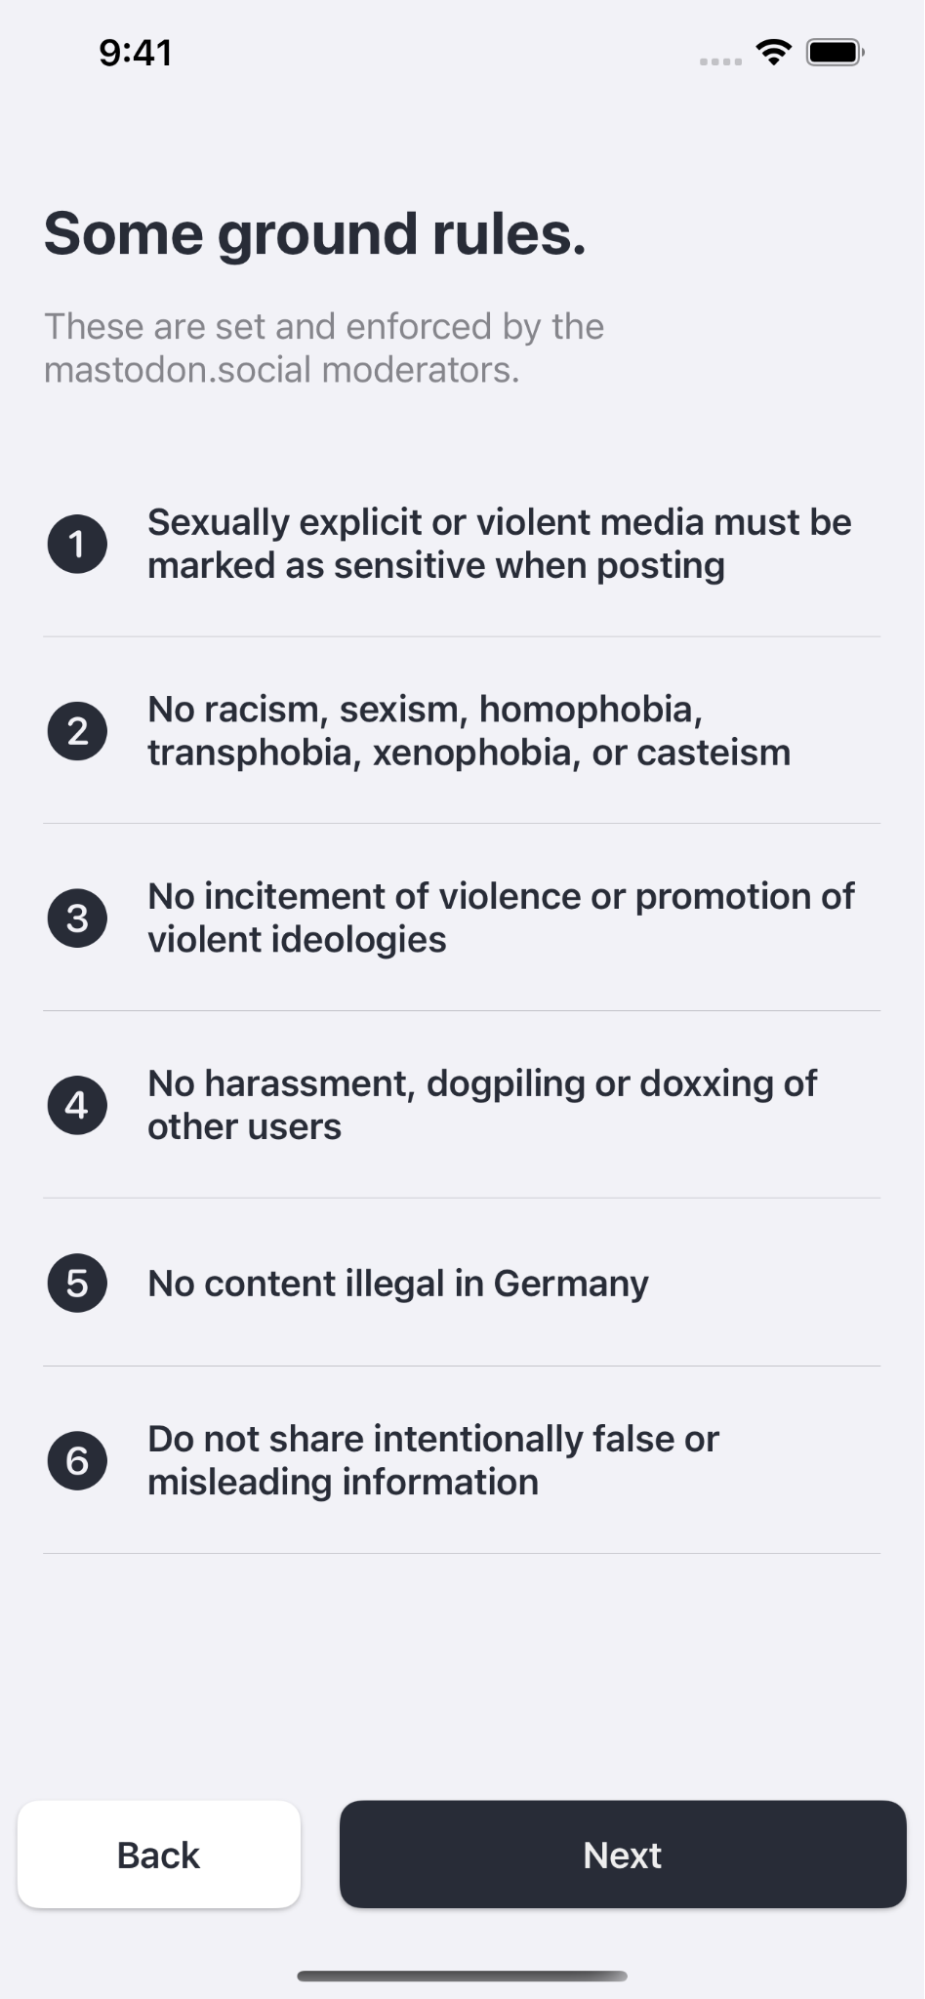 Mastodon's social media rules and guidelines